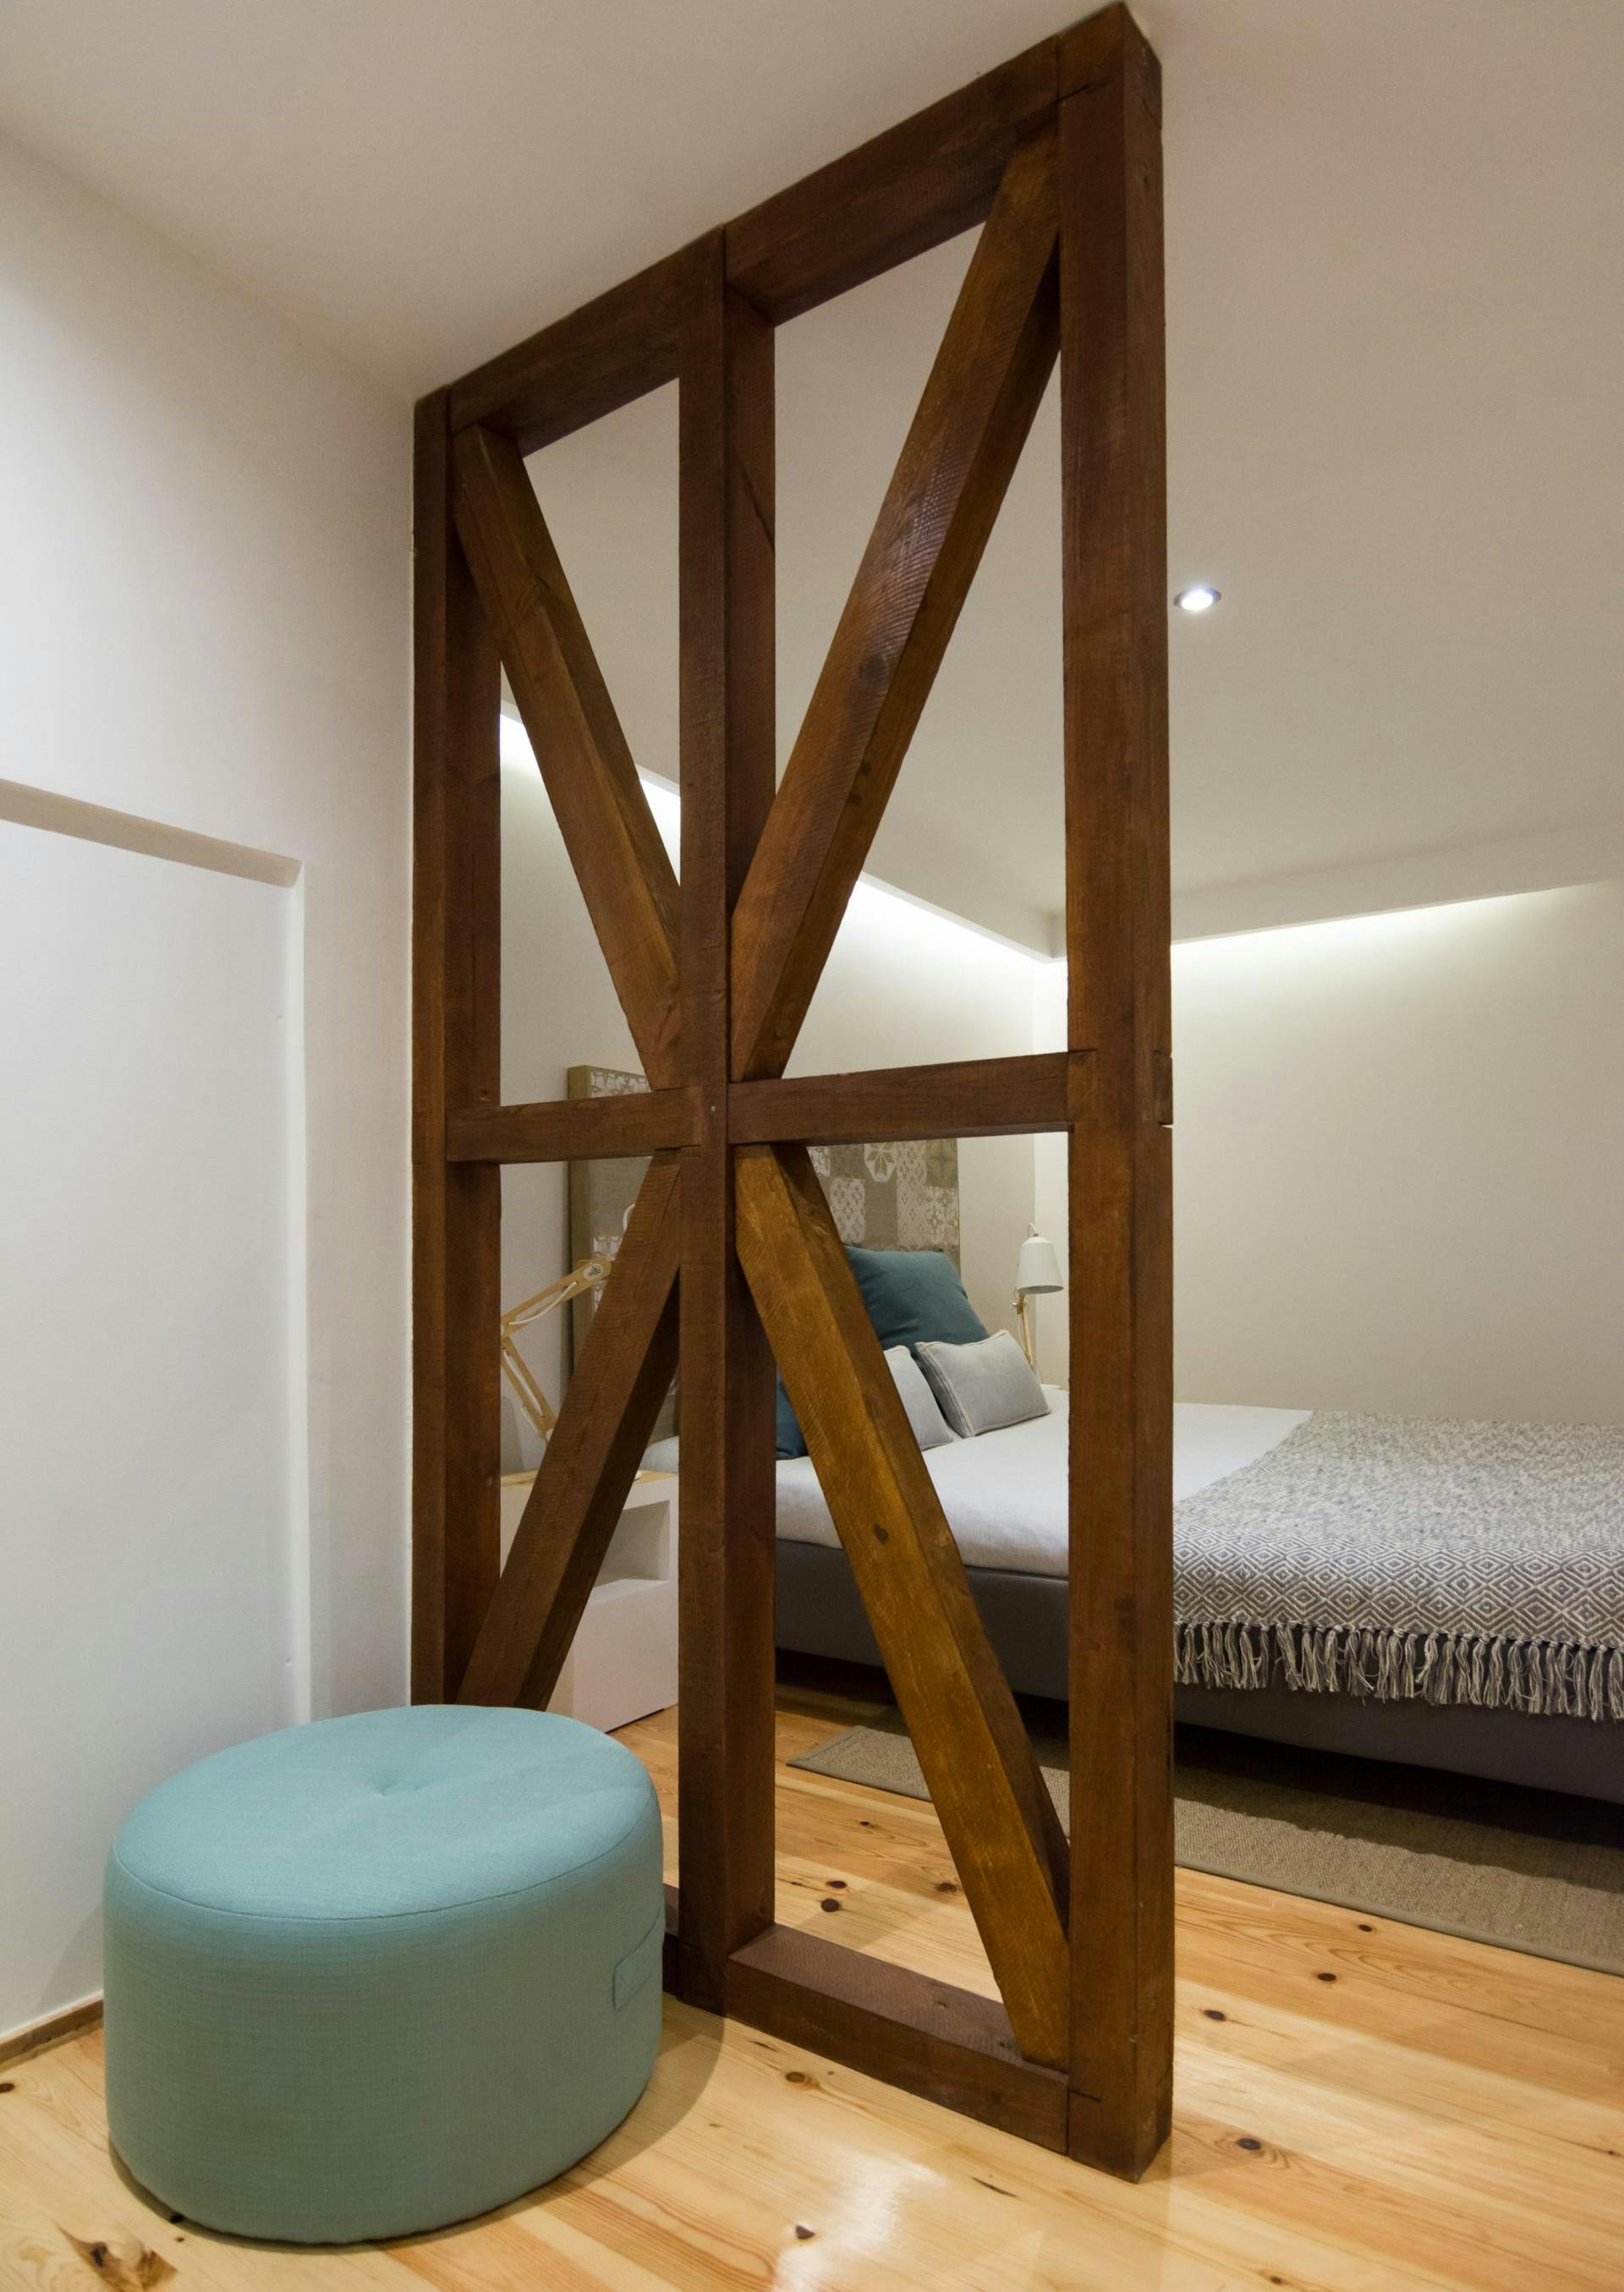 2-Bedroom apartment near Martim Moniz metro station